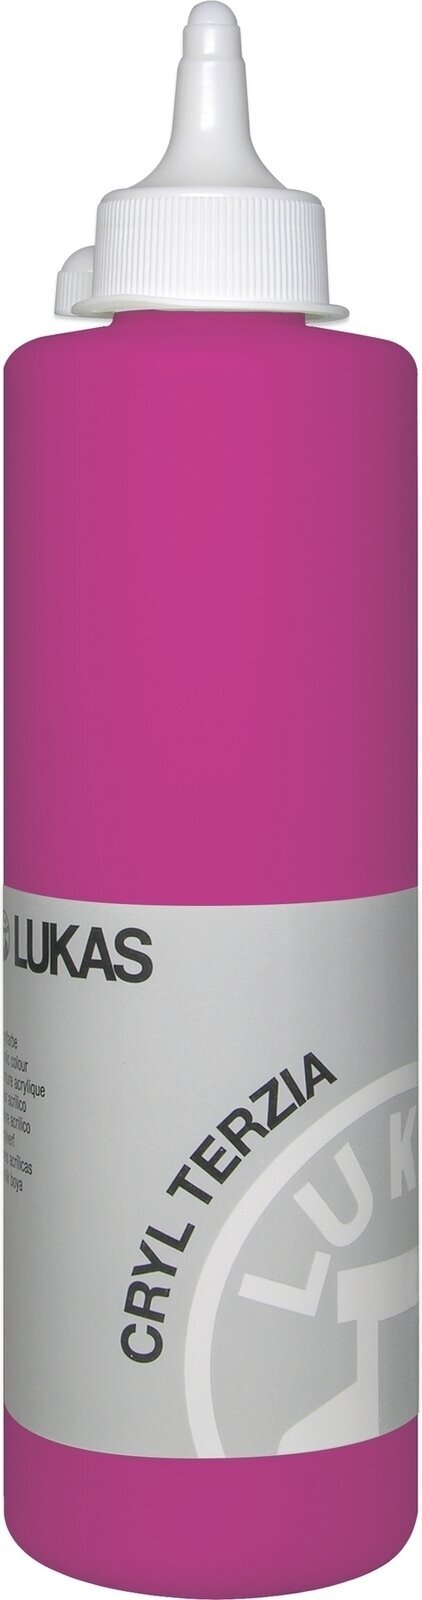 Akrilna barva Lukas Cryl Terzia Acrylic Paint Plastic Bottle Akrilna barva Primary Red 500 ml 1 kos